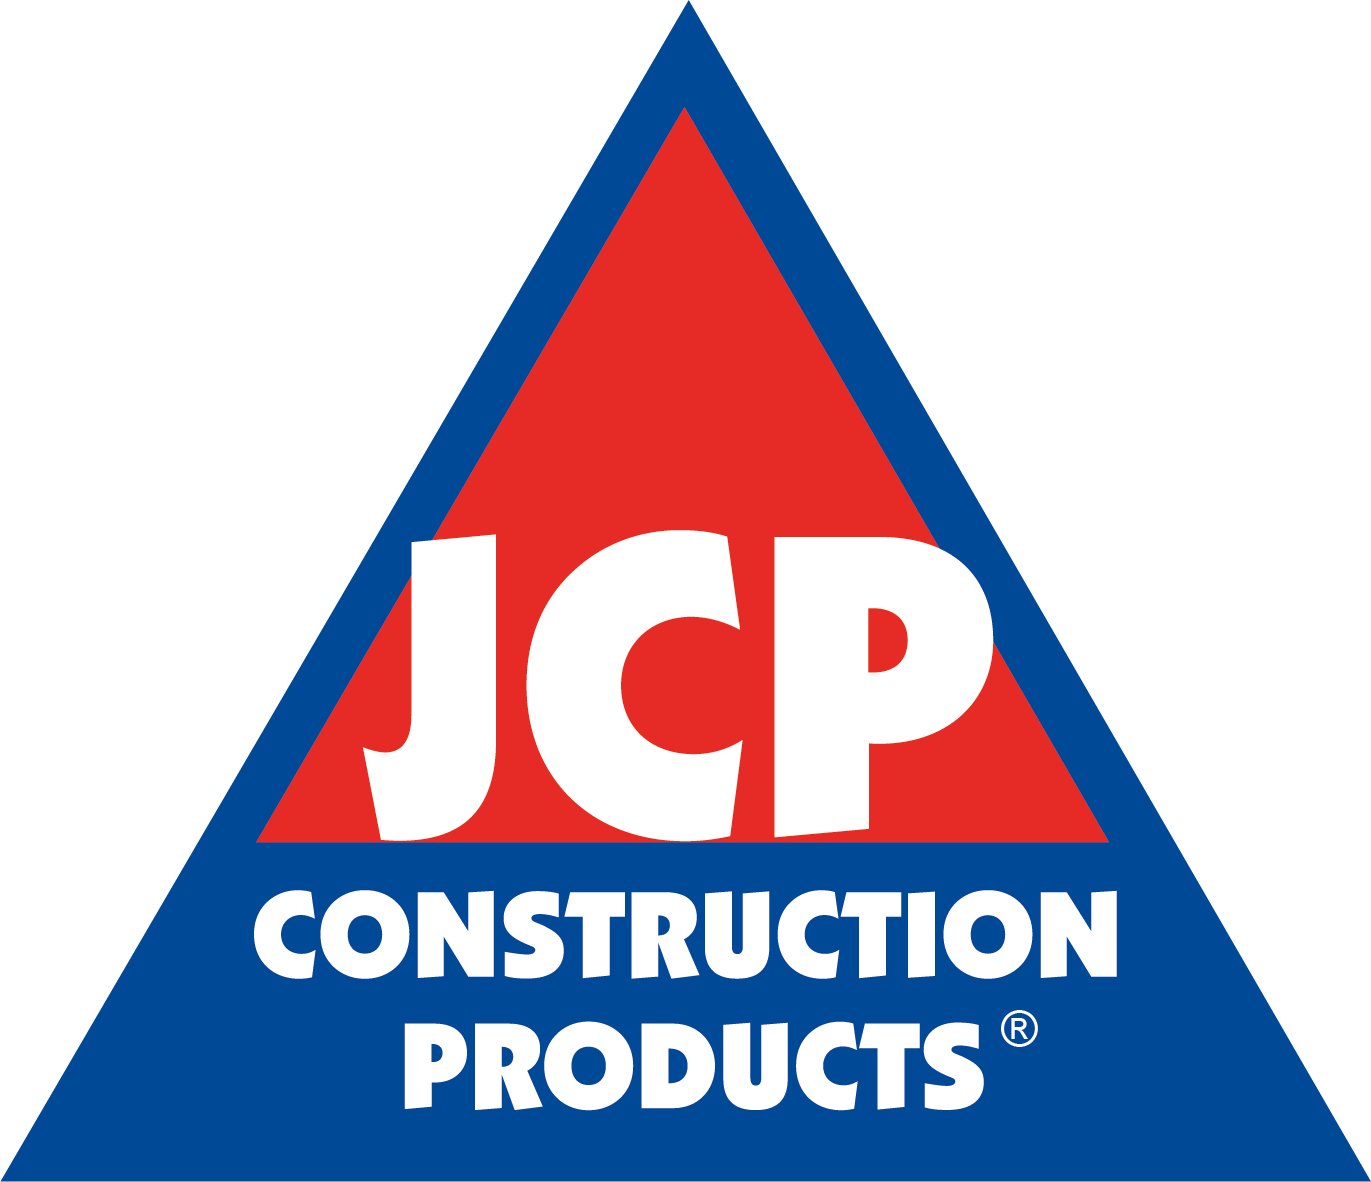 JCP logo